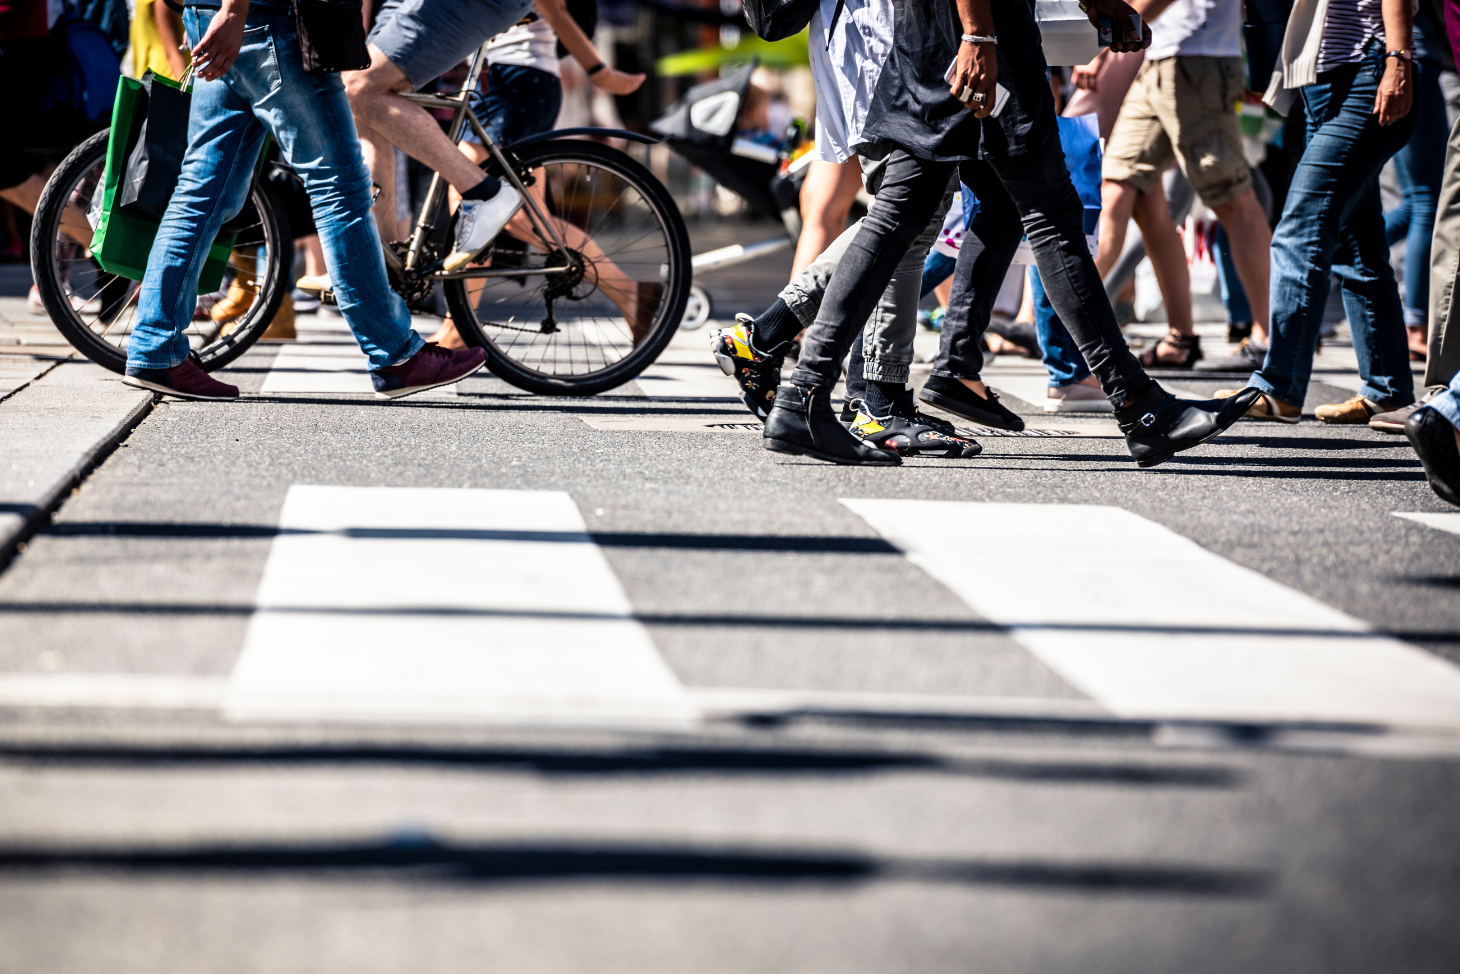 Bikes and people crossing the street in a crosswalk